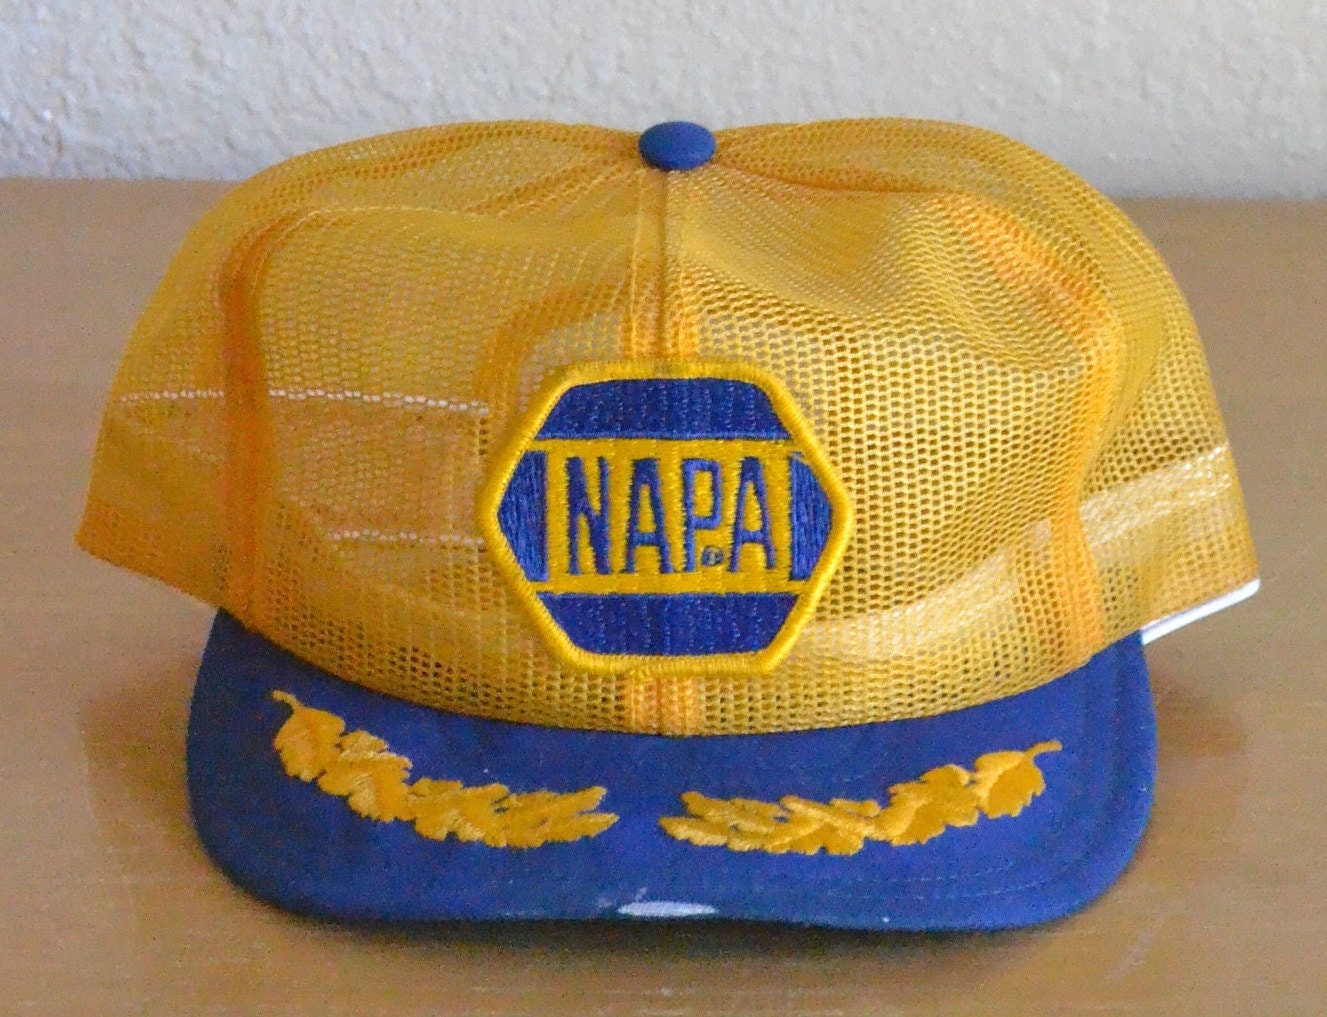 Vintage Napa Racing Patch Full Mesh Cap Louisville USA Snapback Trucker Hat  USA